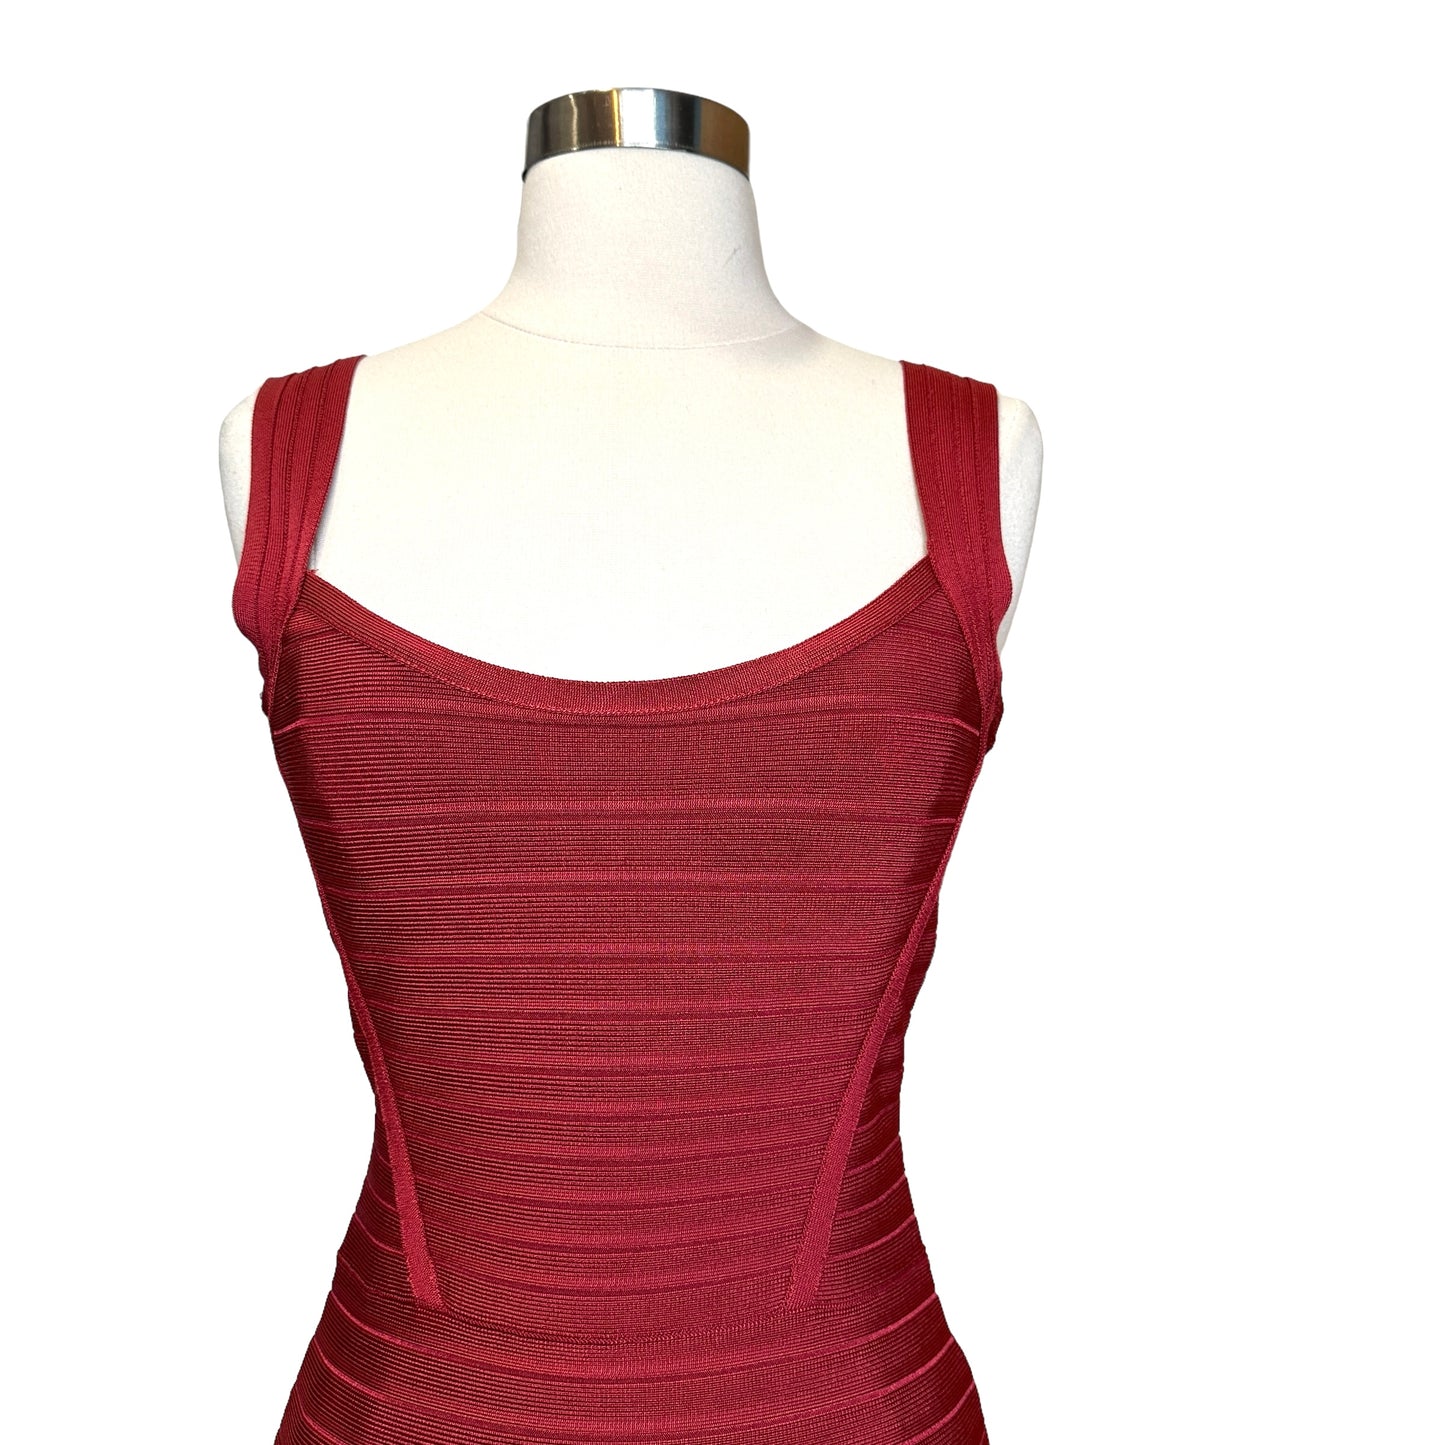 Red Bandage Dress - S